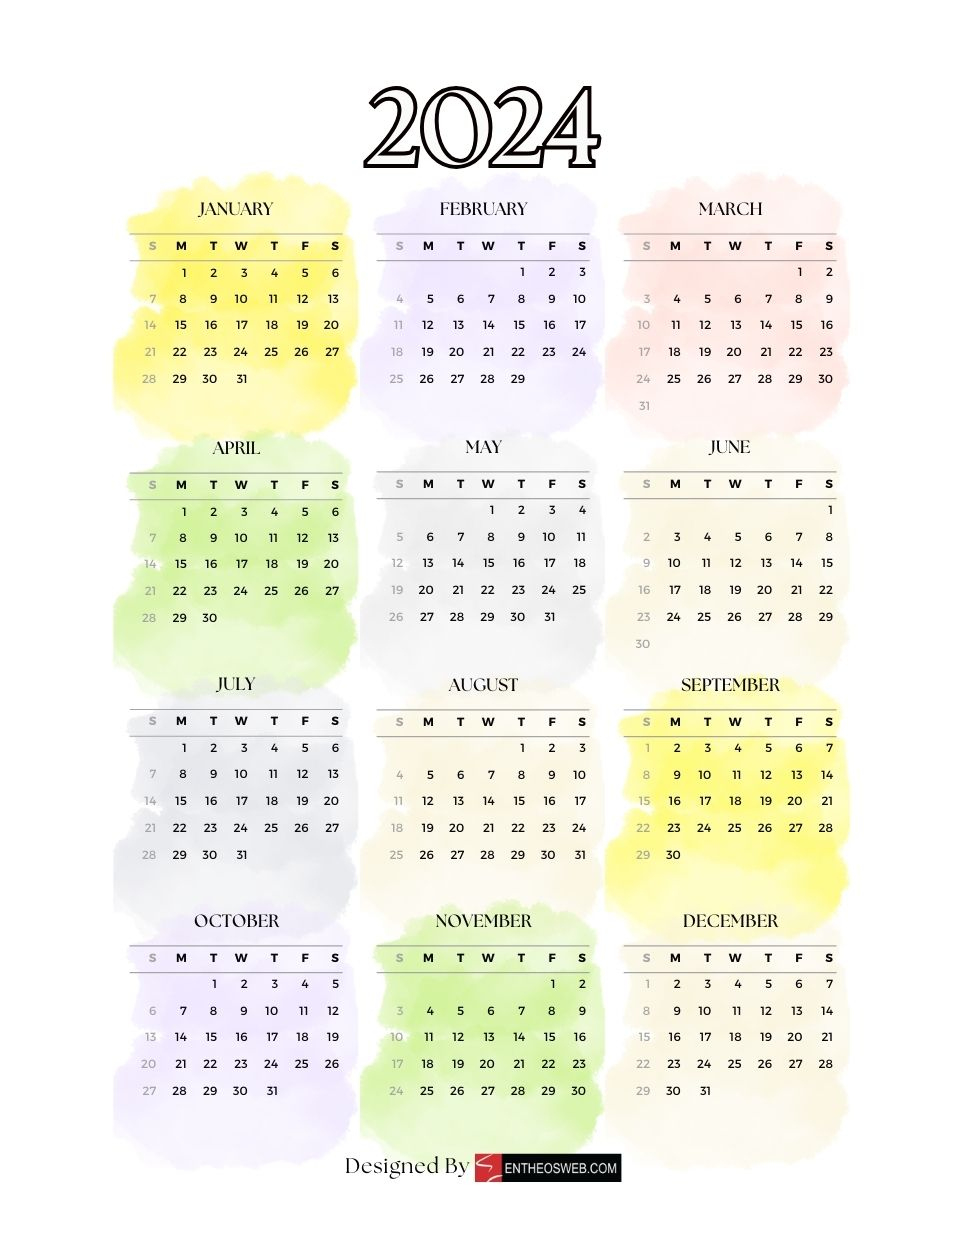 2024 Calendars – Free Printable Calendar Designs | Entheosweb | 2024 Yearly Calendar Printable Pdf Free